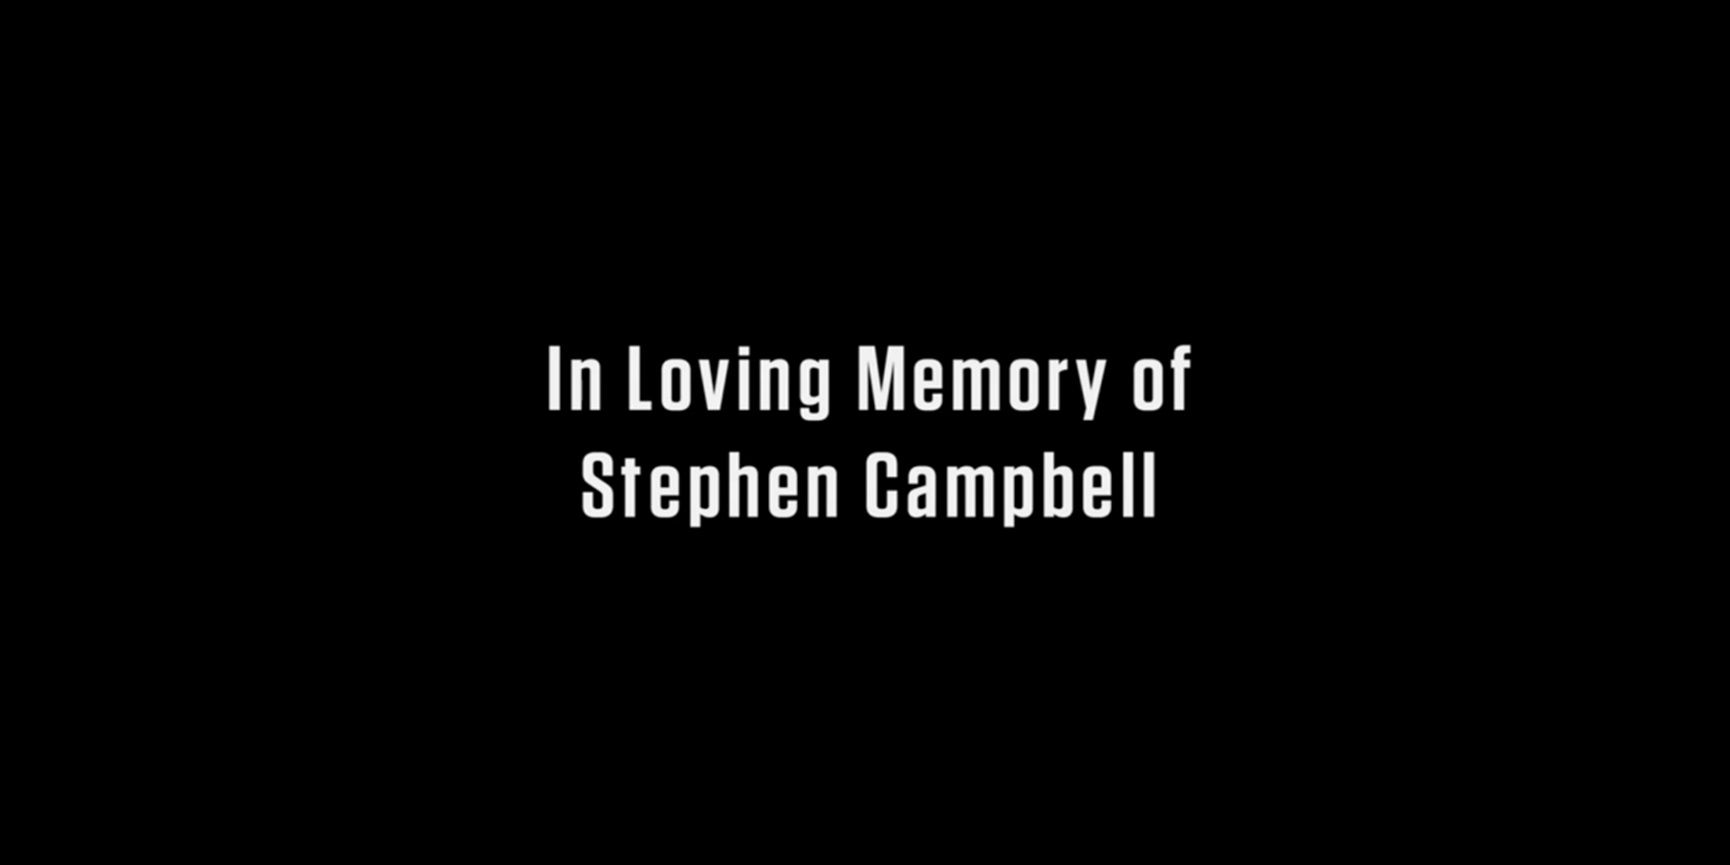 Stephen Campbell's dedication in The Walking Dead